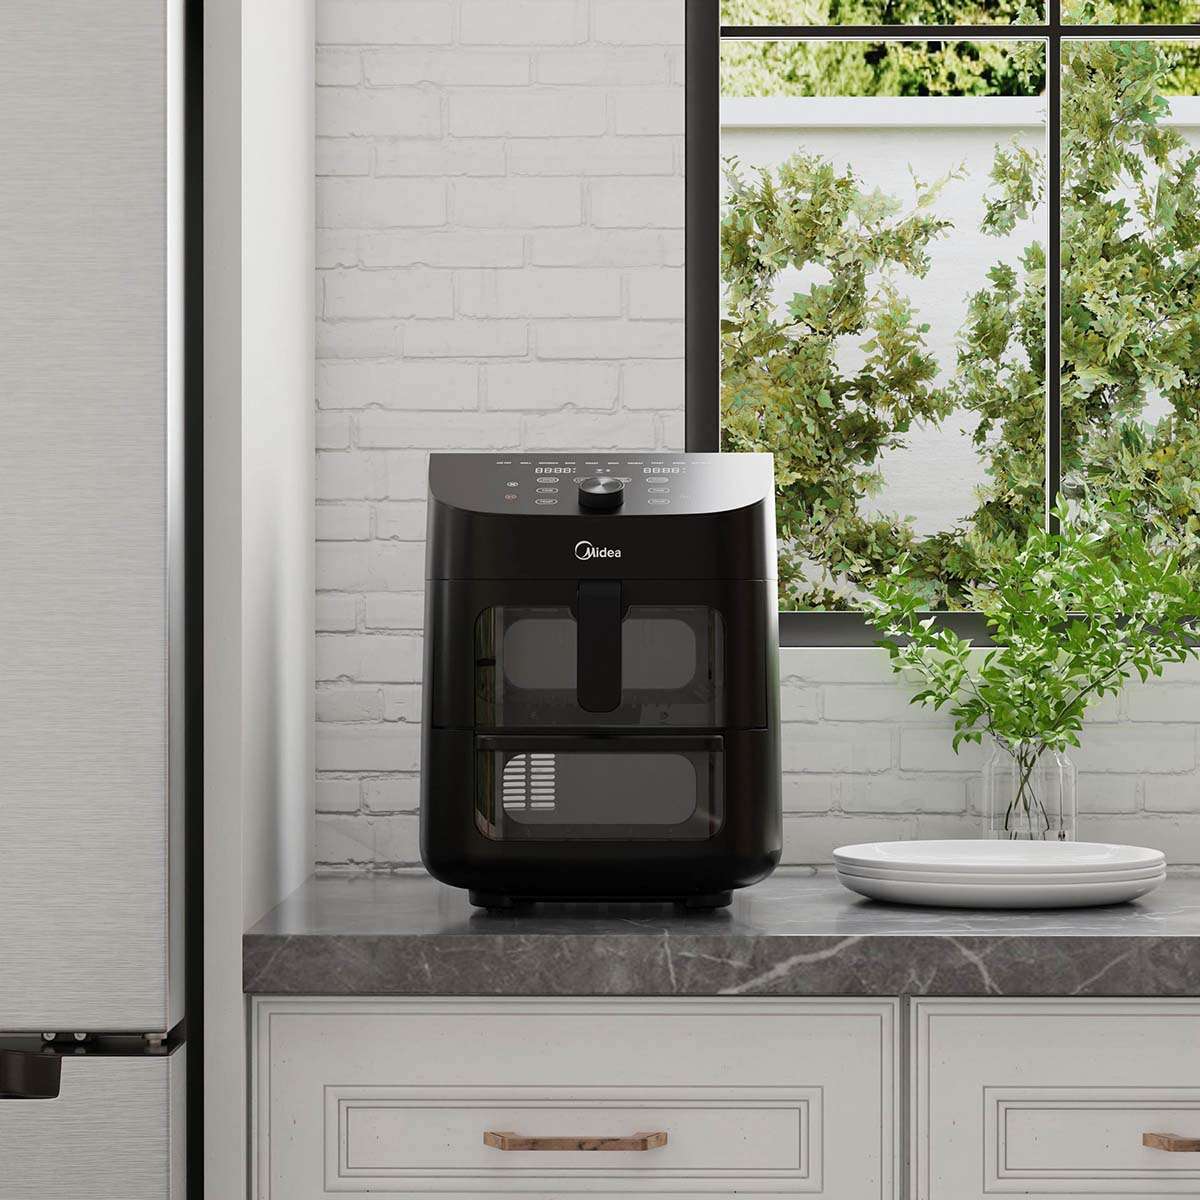 InstaFry 2-in-1 Pressure Cooker & Air Fryer – Midea Home Appliances